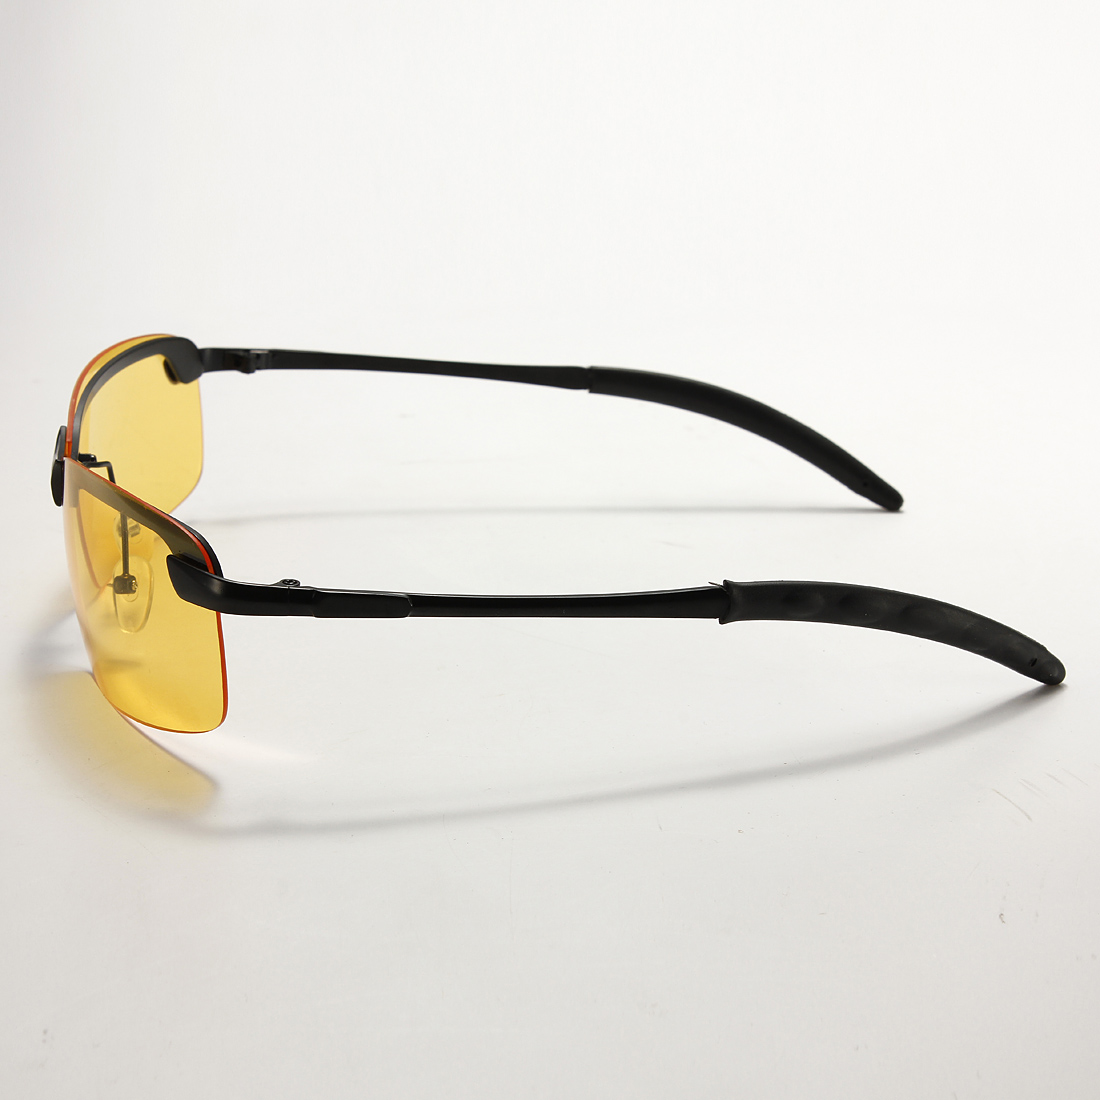 Vision Driving Sports Polarized Sunglasses Anti Glare Eye Glasses